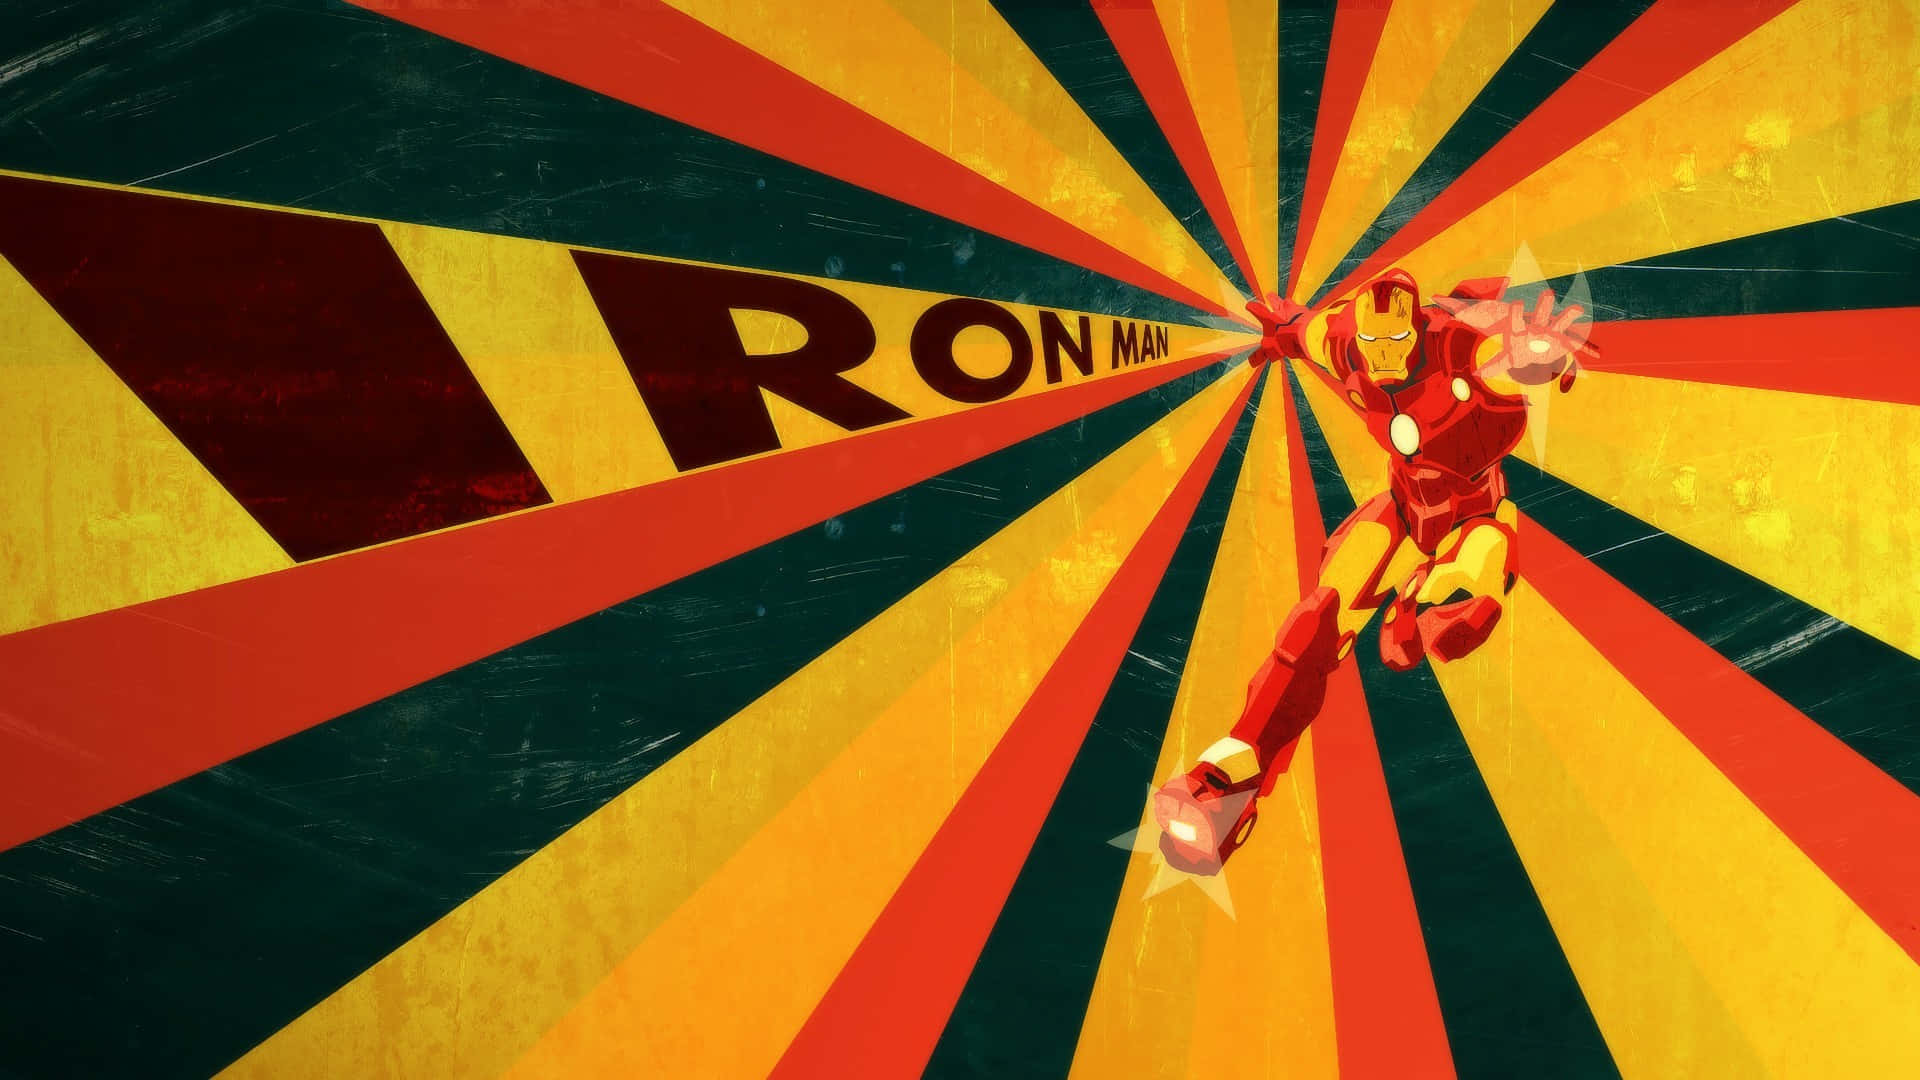 Iron Man's strength is more than skin deep Wallpaper